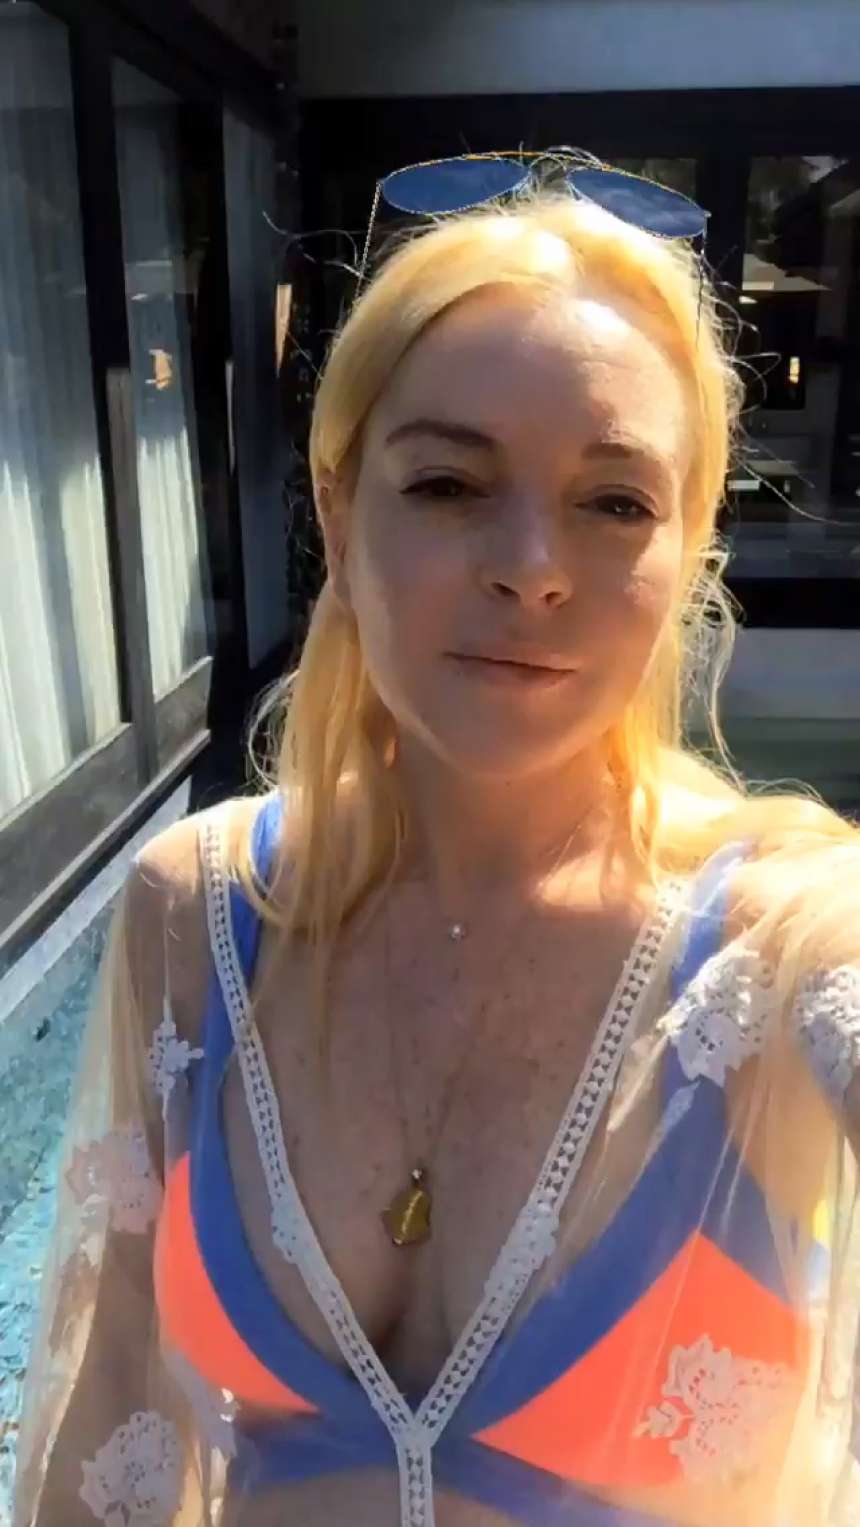 Lindsay Lohan in Bikini - Personal Pics